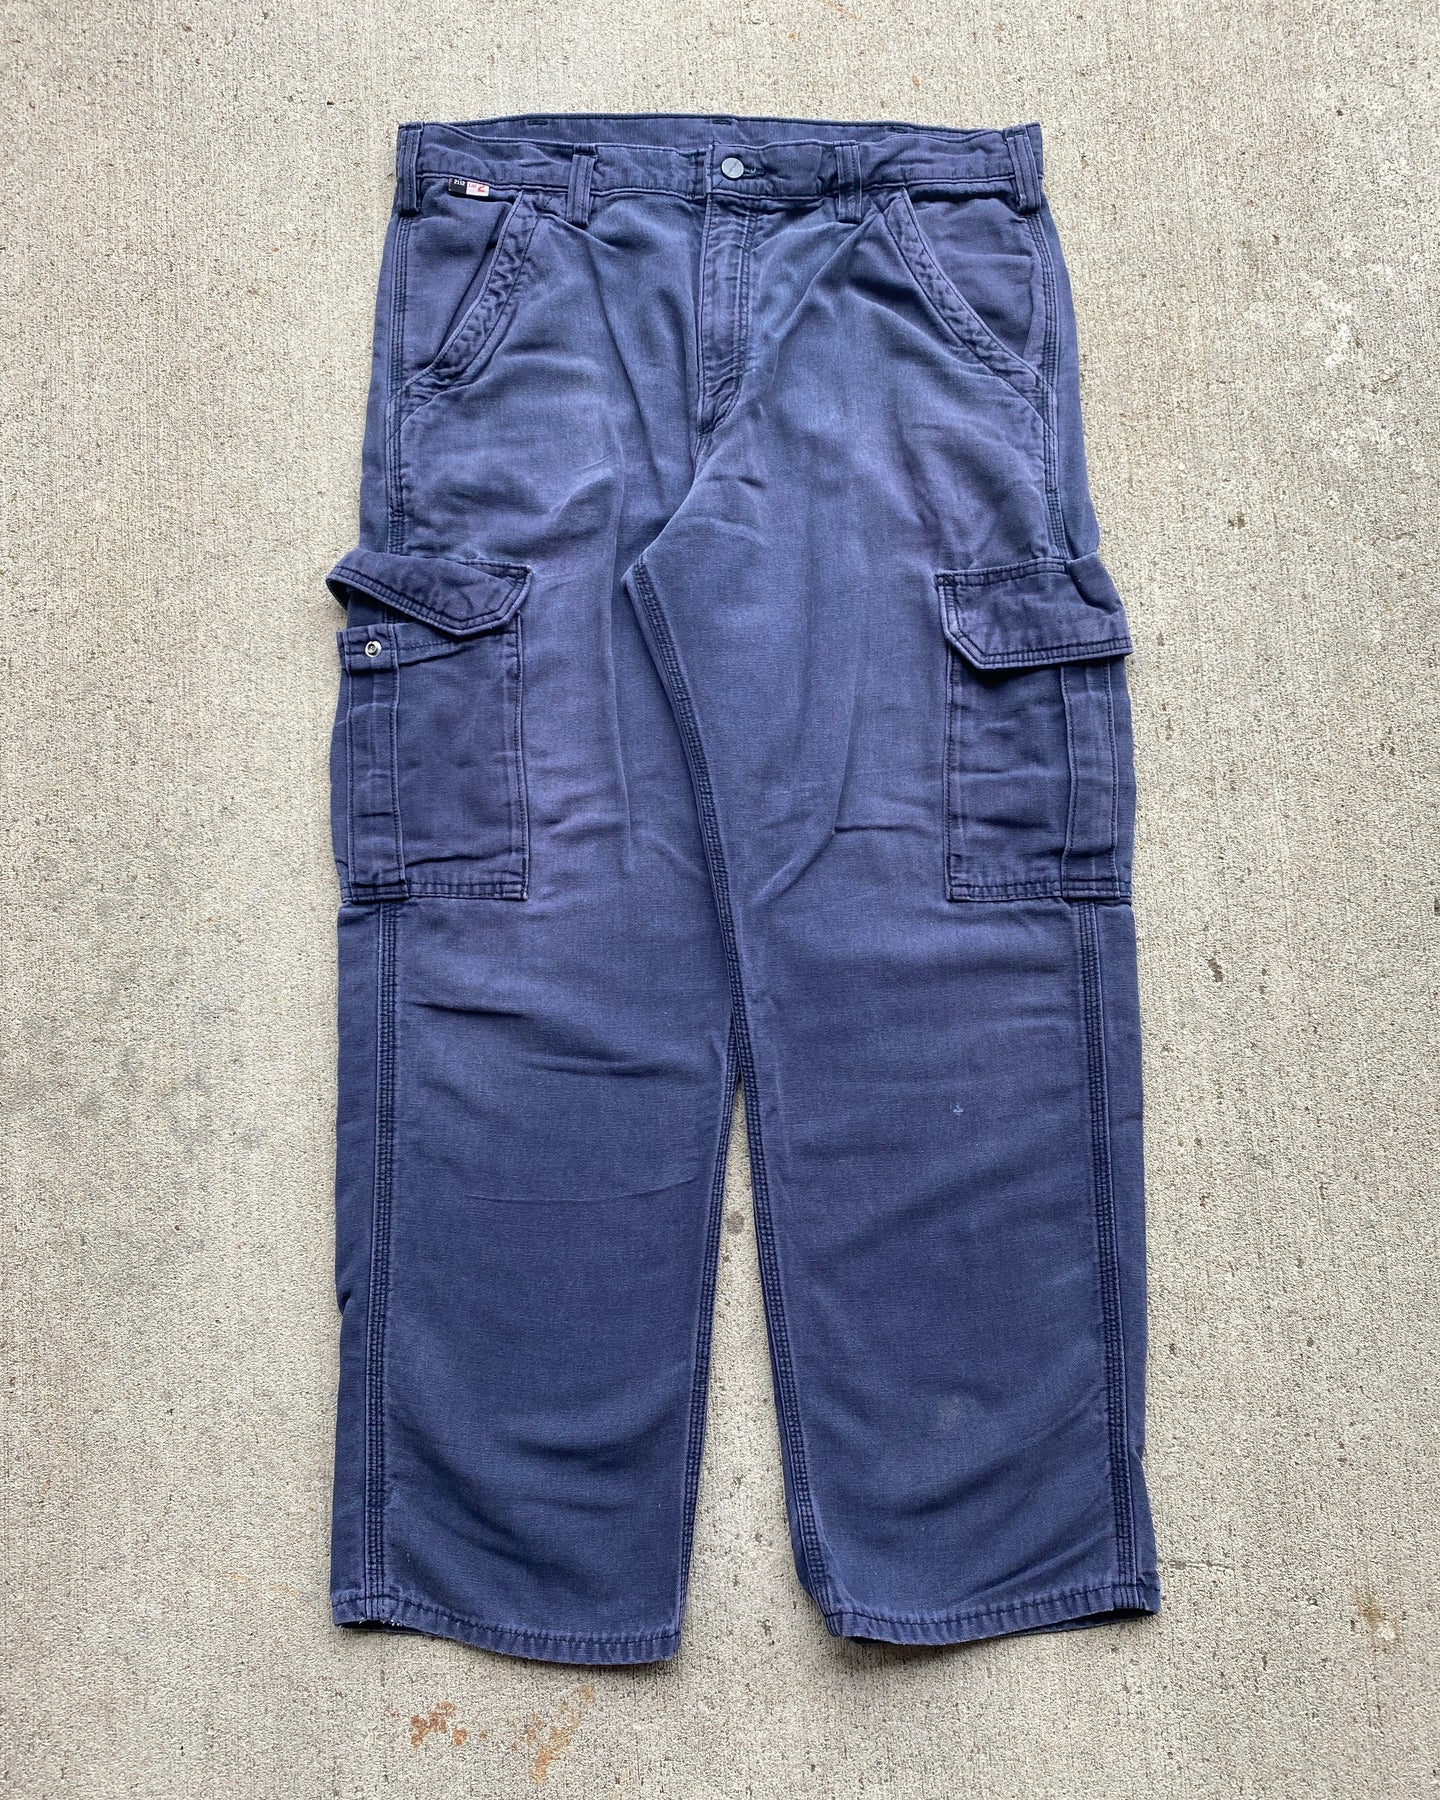 Carhartt Navy Cotton Cargo Work Pants - Size 36 x 30